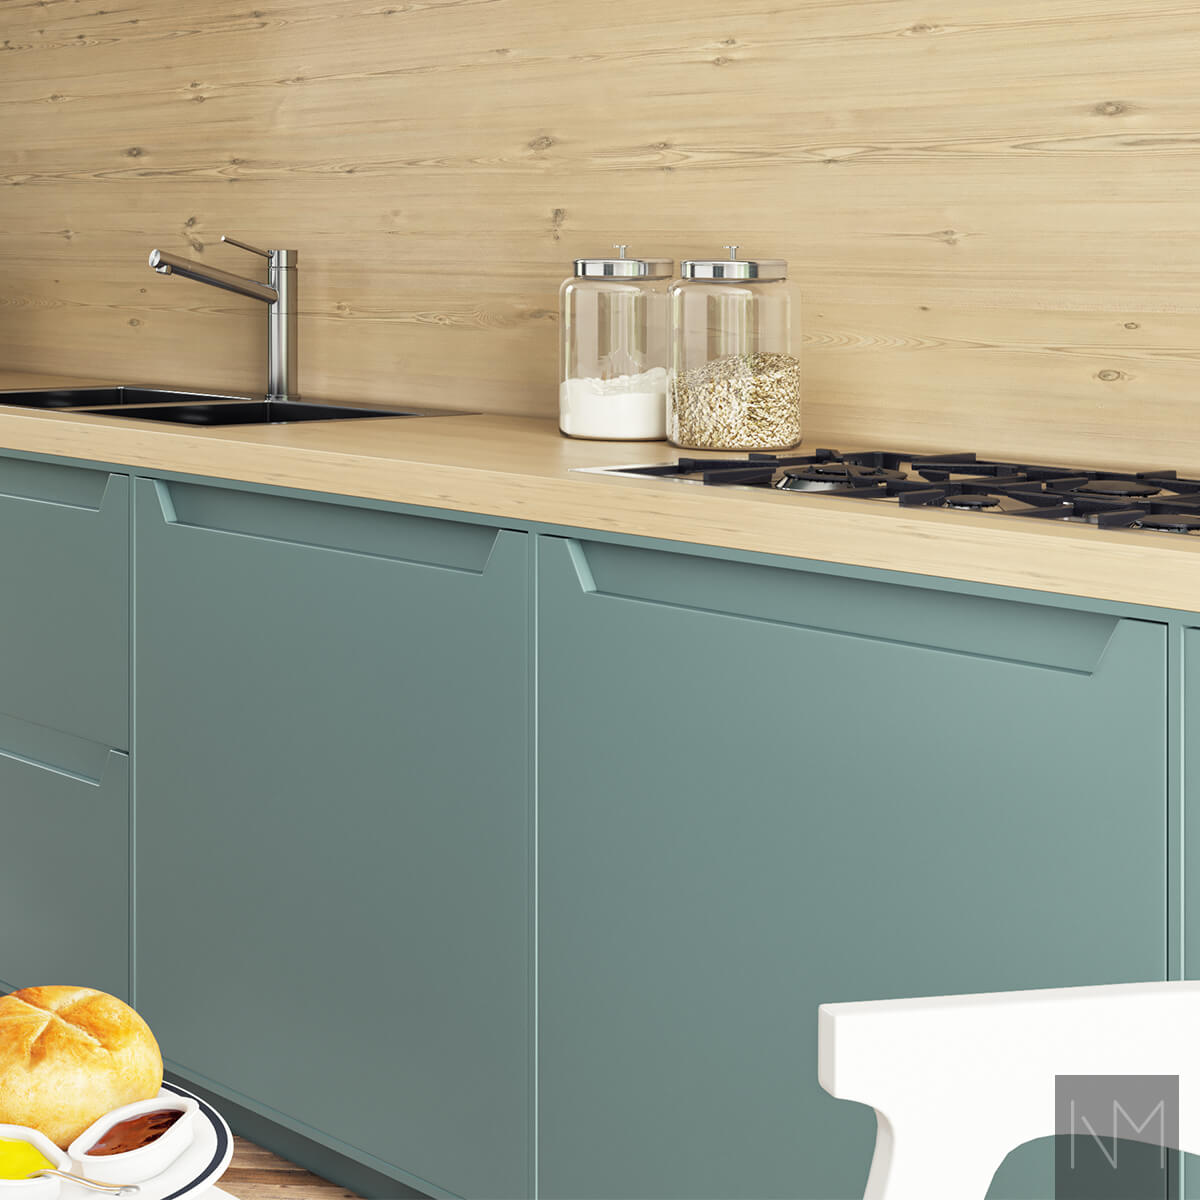 IKEA Metod or Faktum kitchen Elegance. Colour NCS 6713-B34G or Jotun Dark Teal 5454